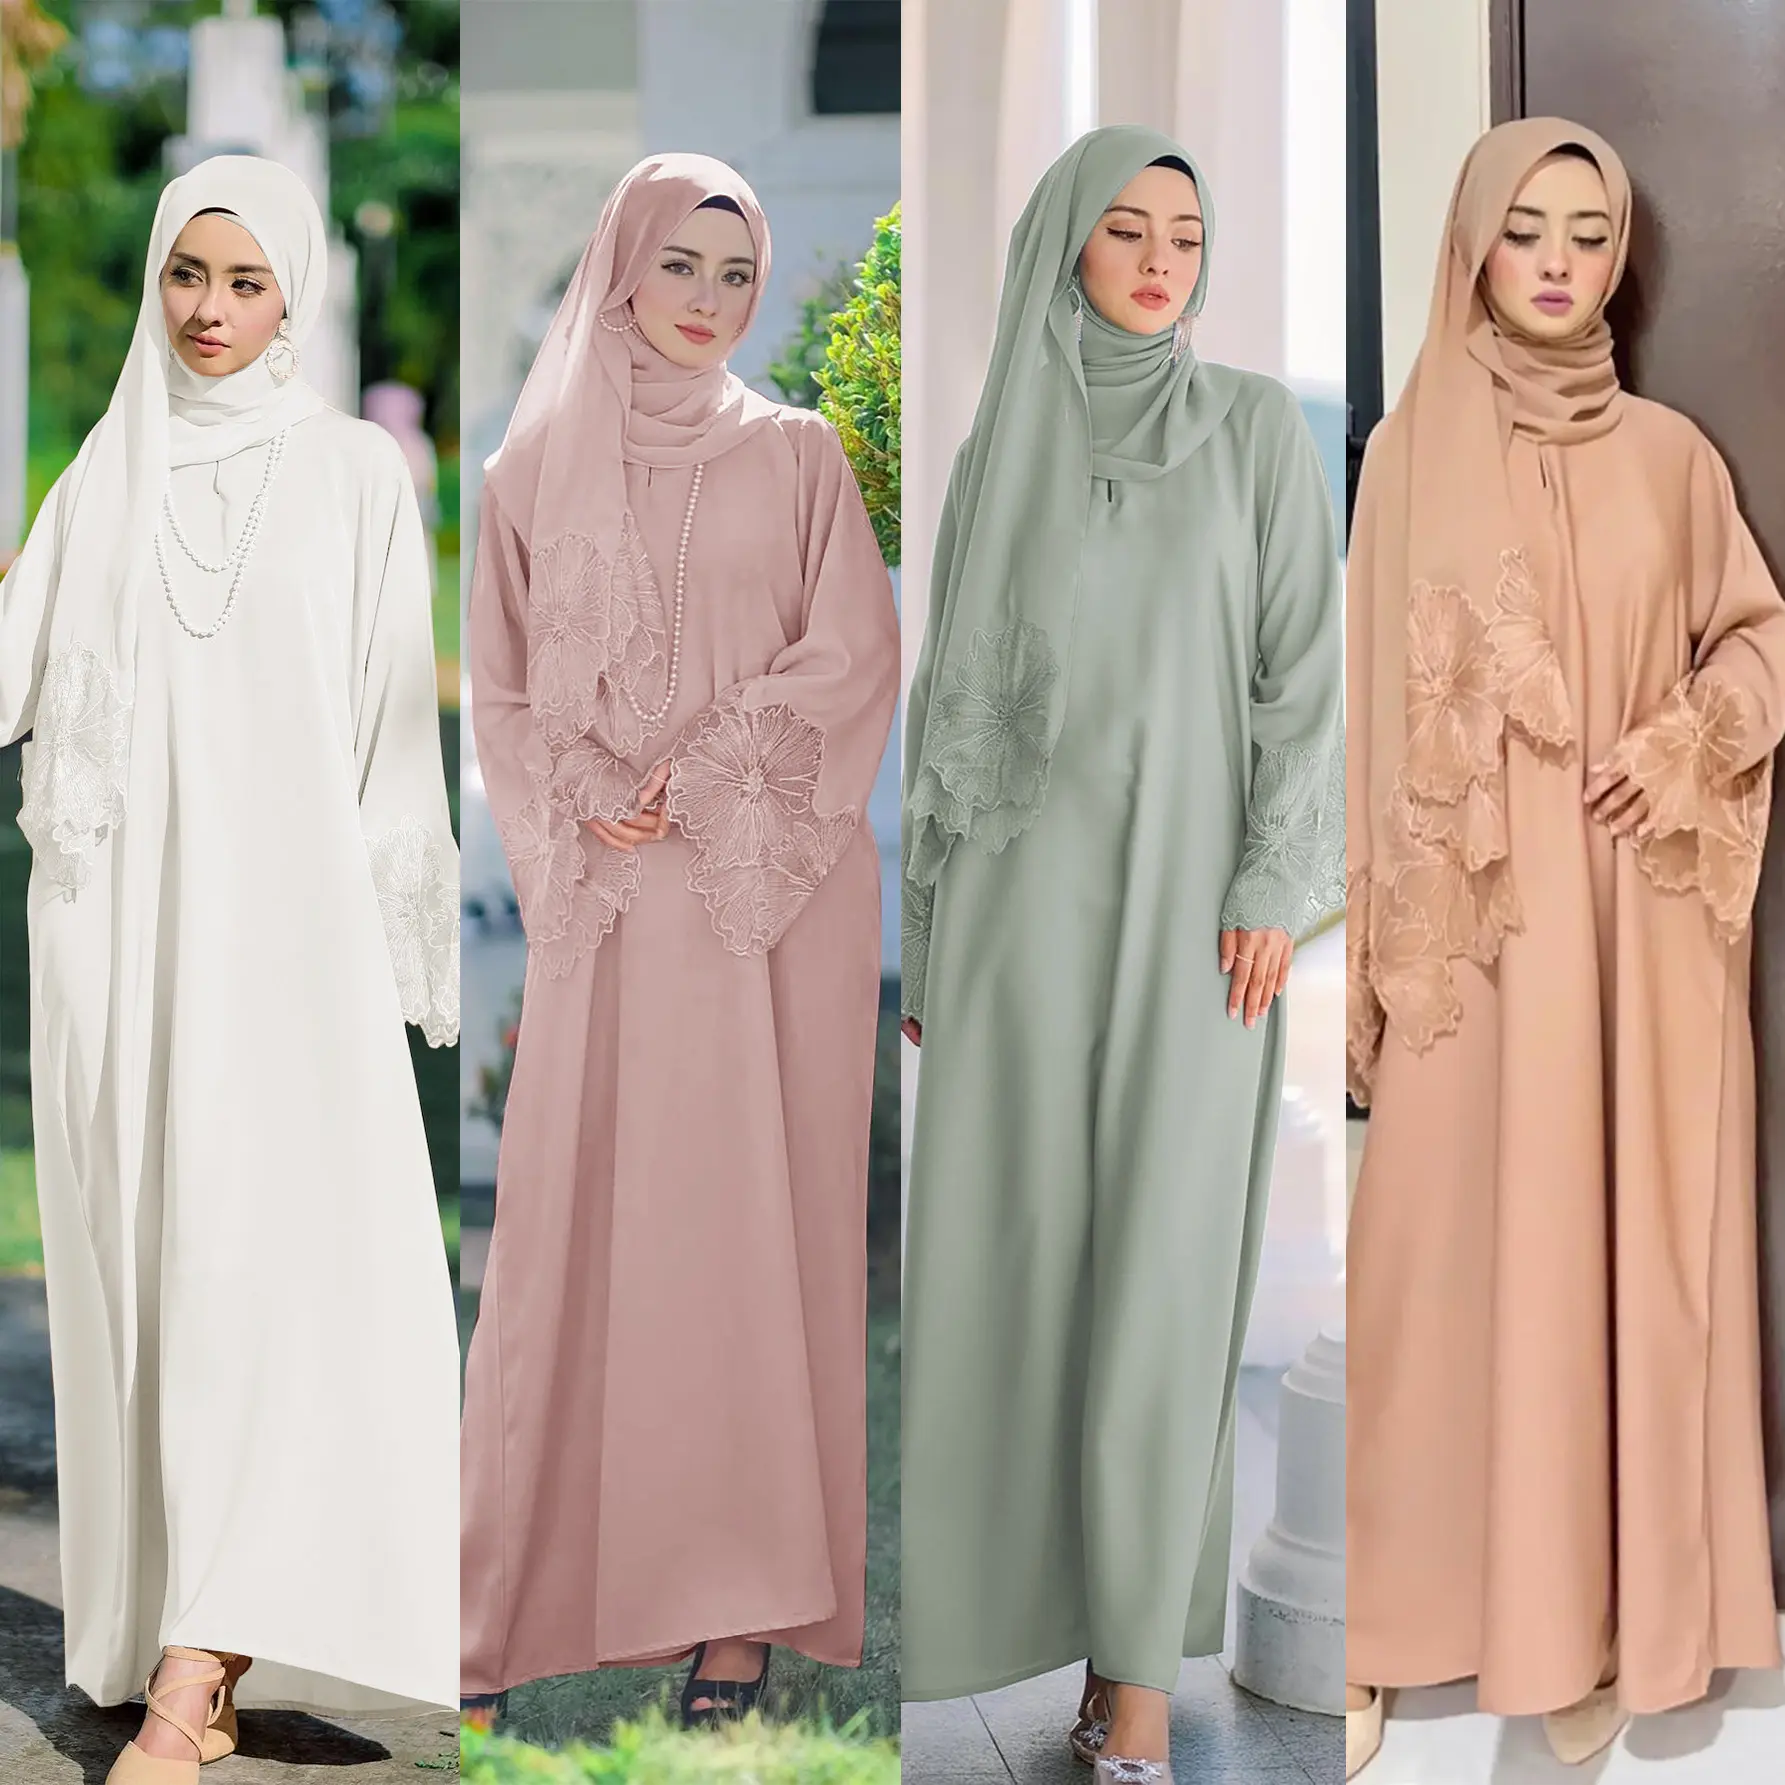 5 Colors In Islamic Women's Dress Muslim Women's Abaya Malay Indonesian Dress With Hijab